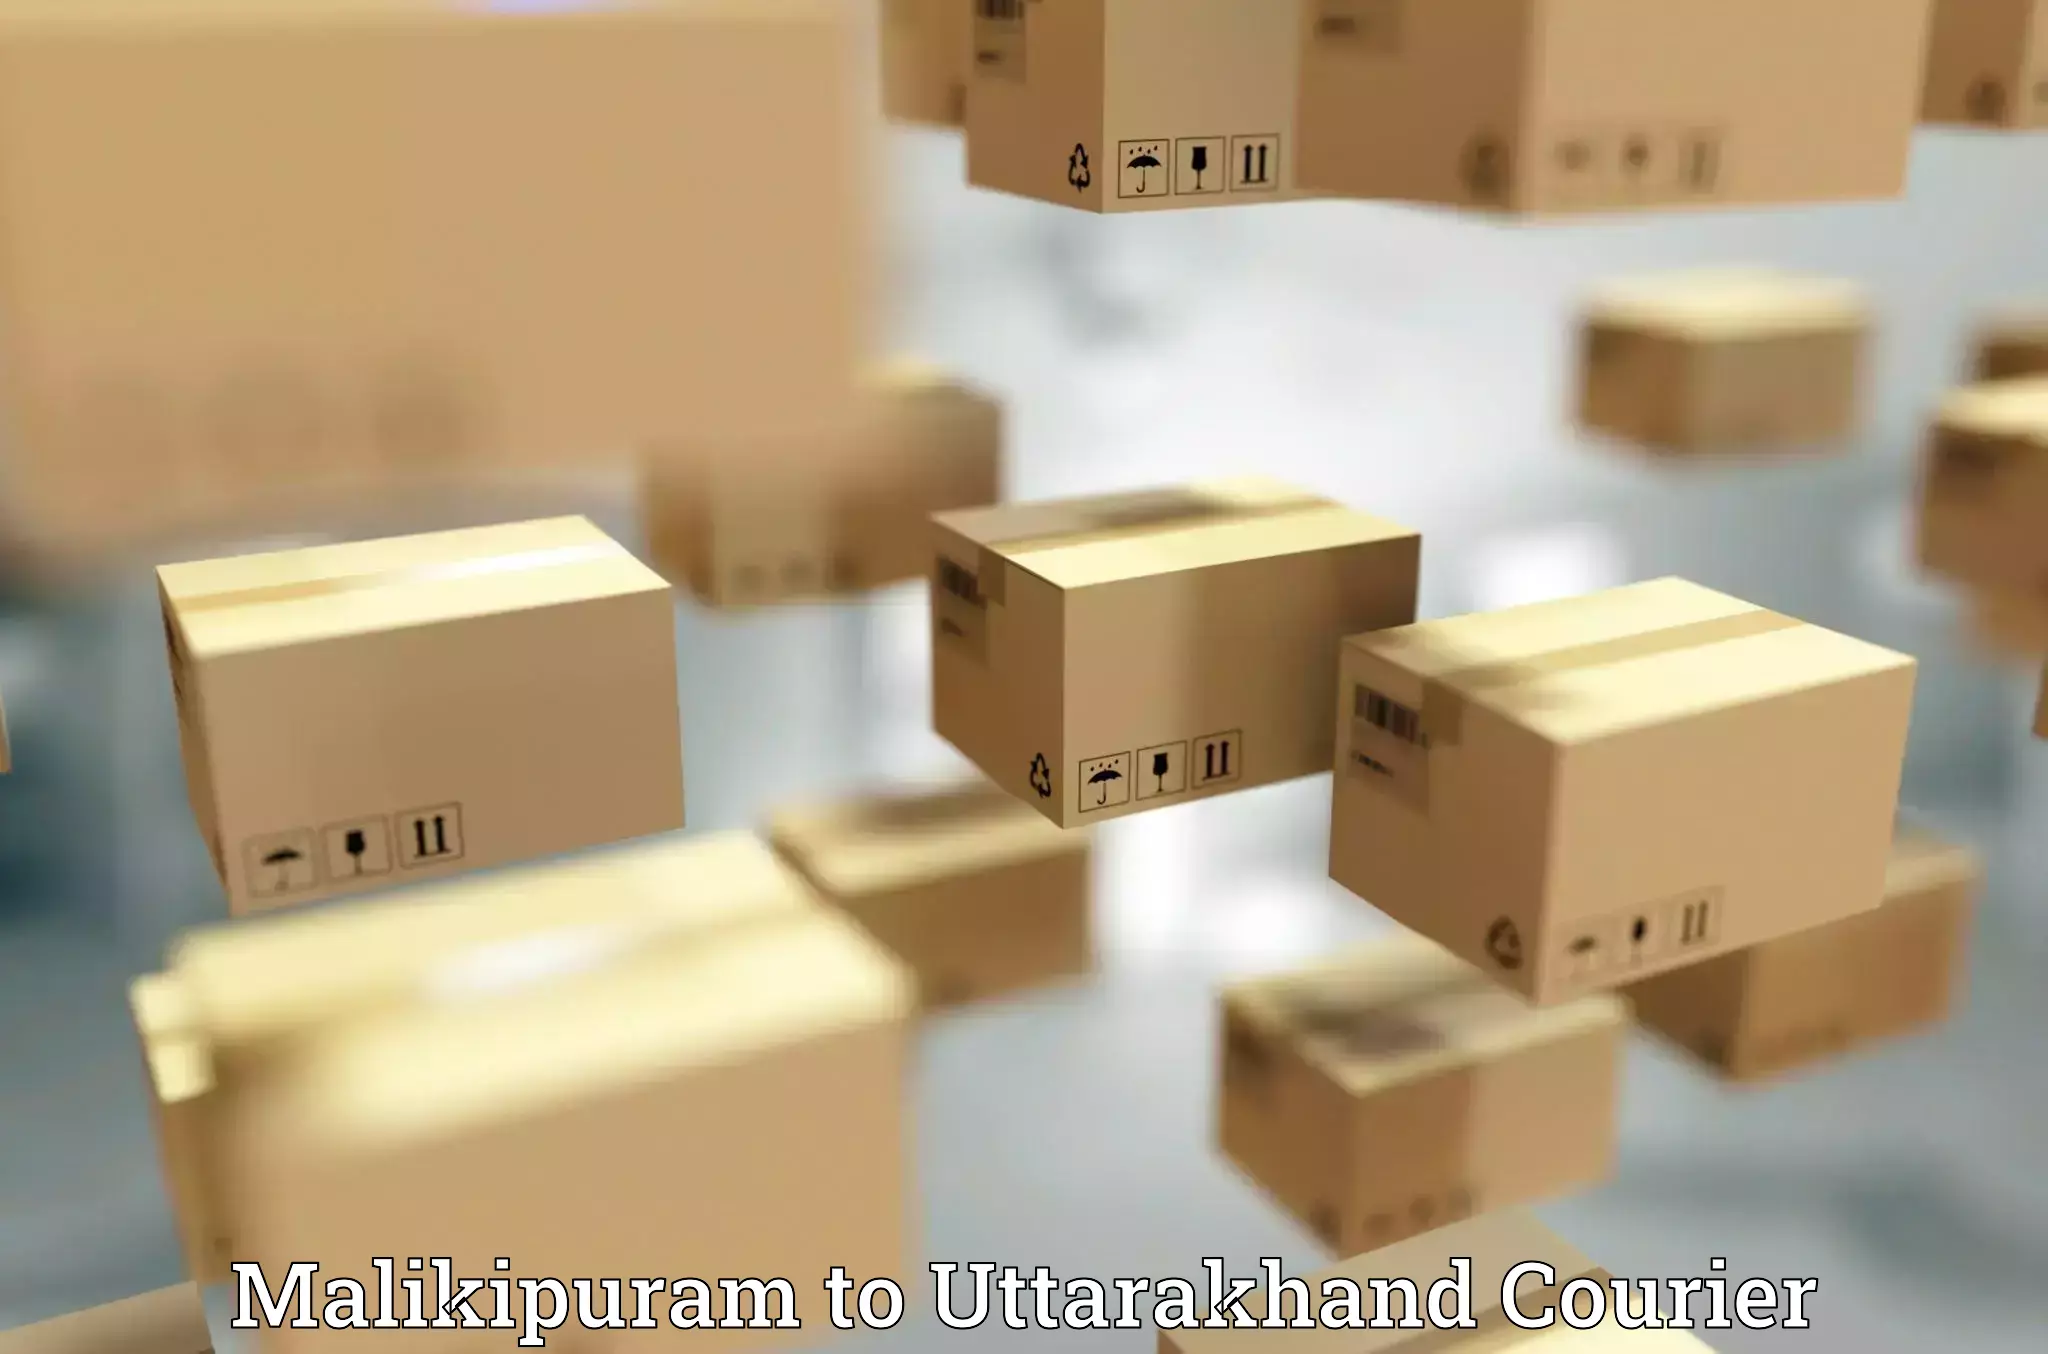 User-friendly delivery service Malikipuram to Uttarakhand